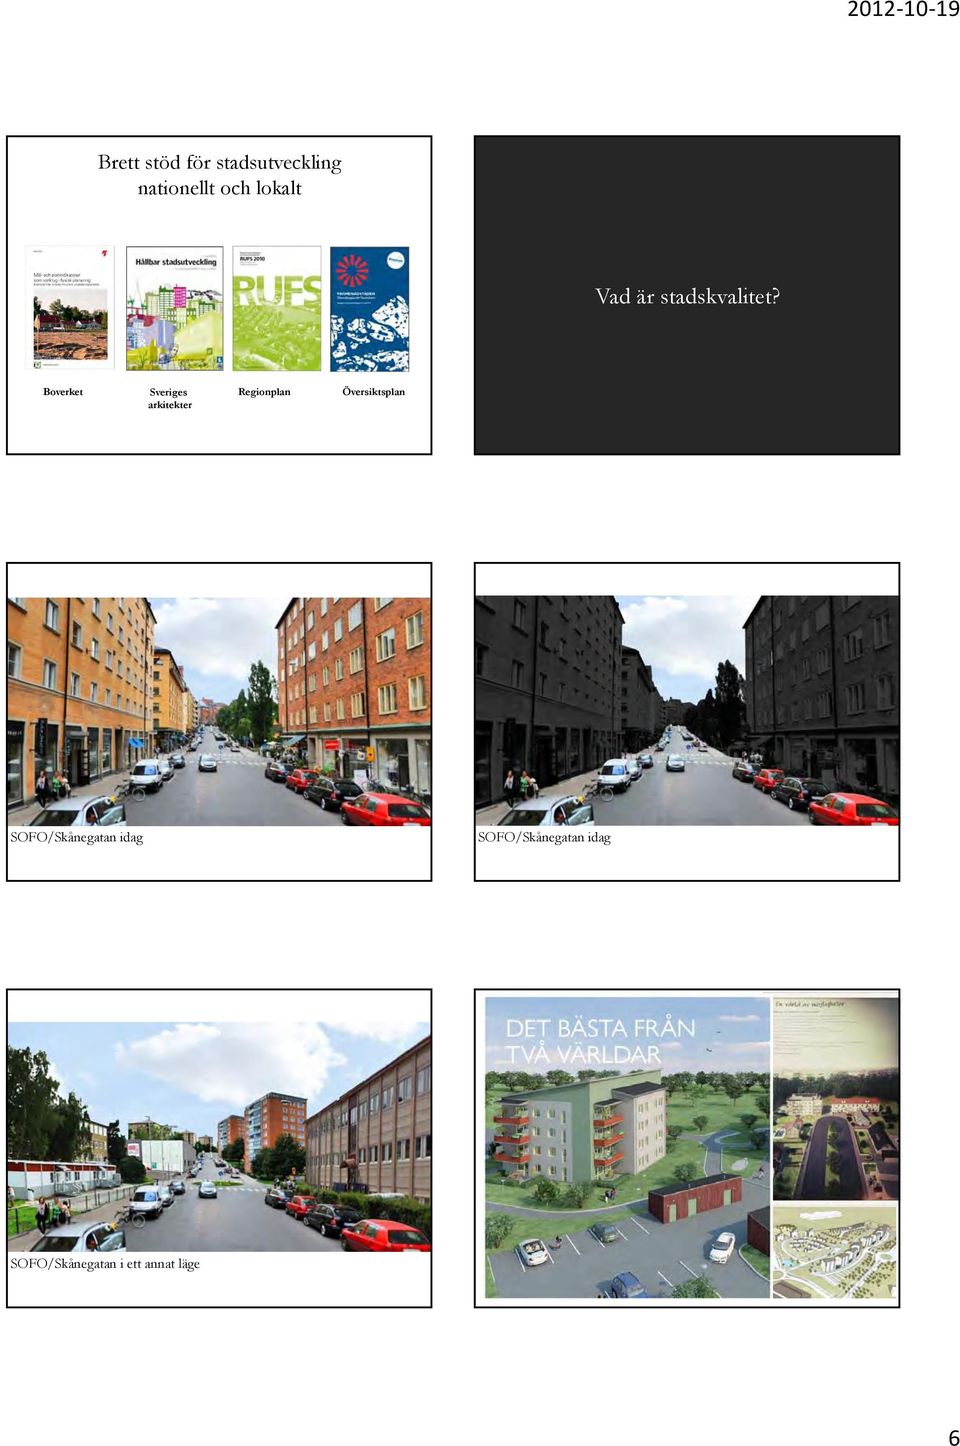 Boverket Sveriges arkitekter Regionplan